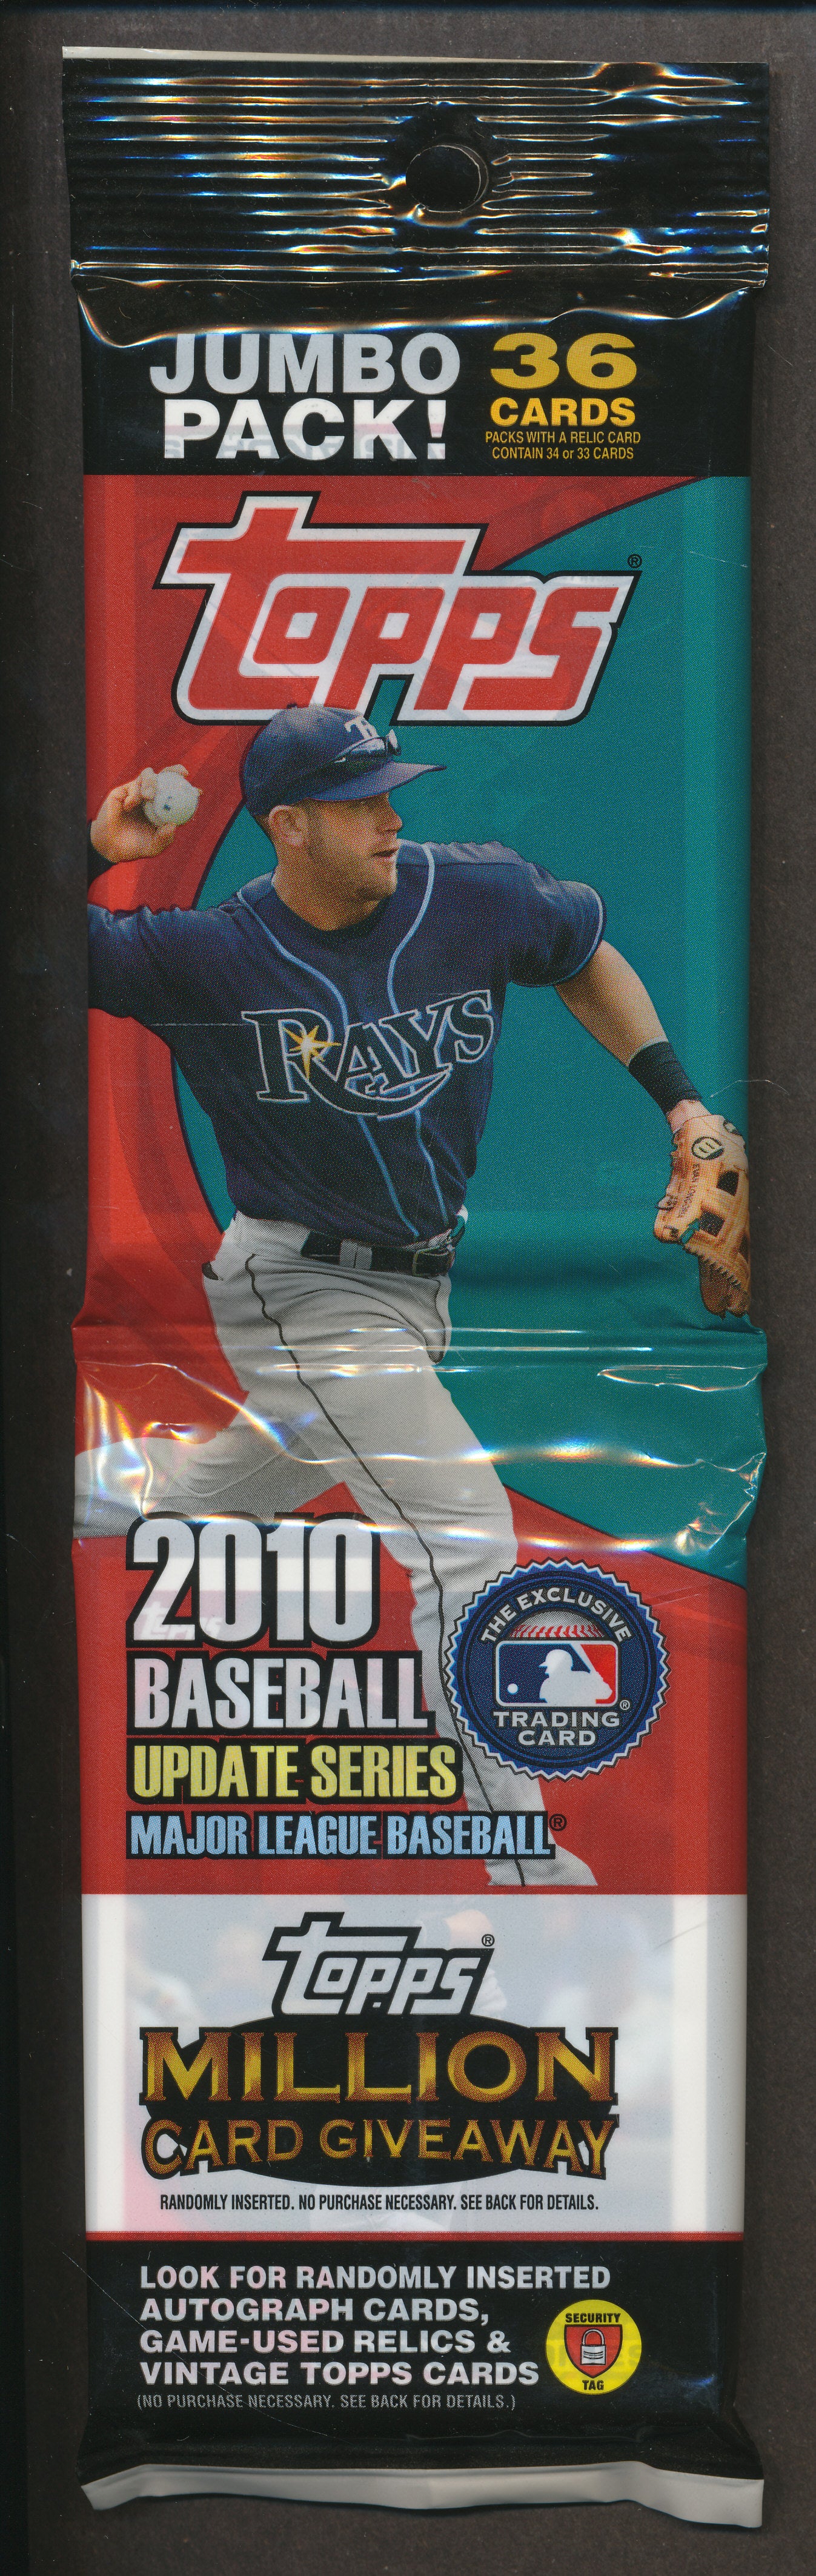 2010 Topps Baseball Update Series Unopened Jumbo Pack (36 cards)